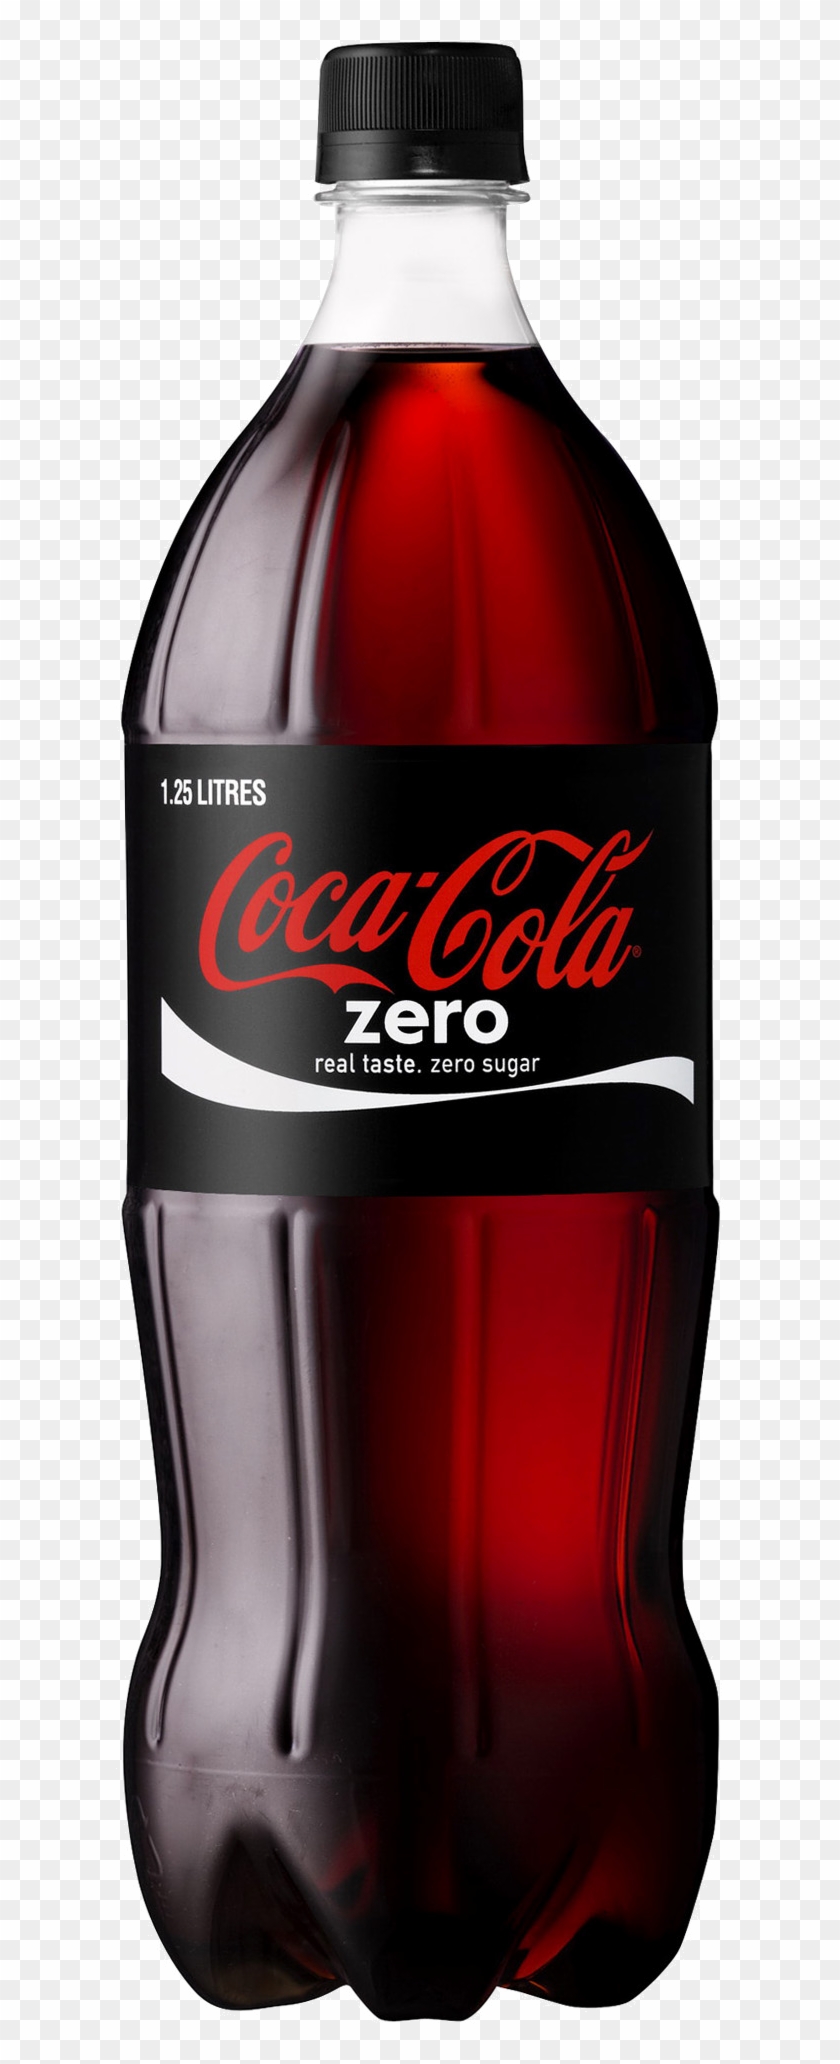 Coca Cola Bottle Png Image - Coca Cola Zero Png #1042017